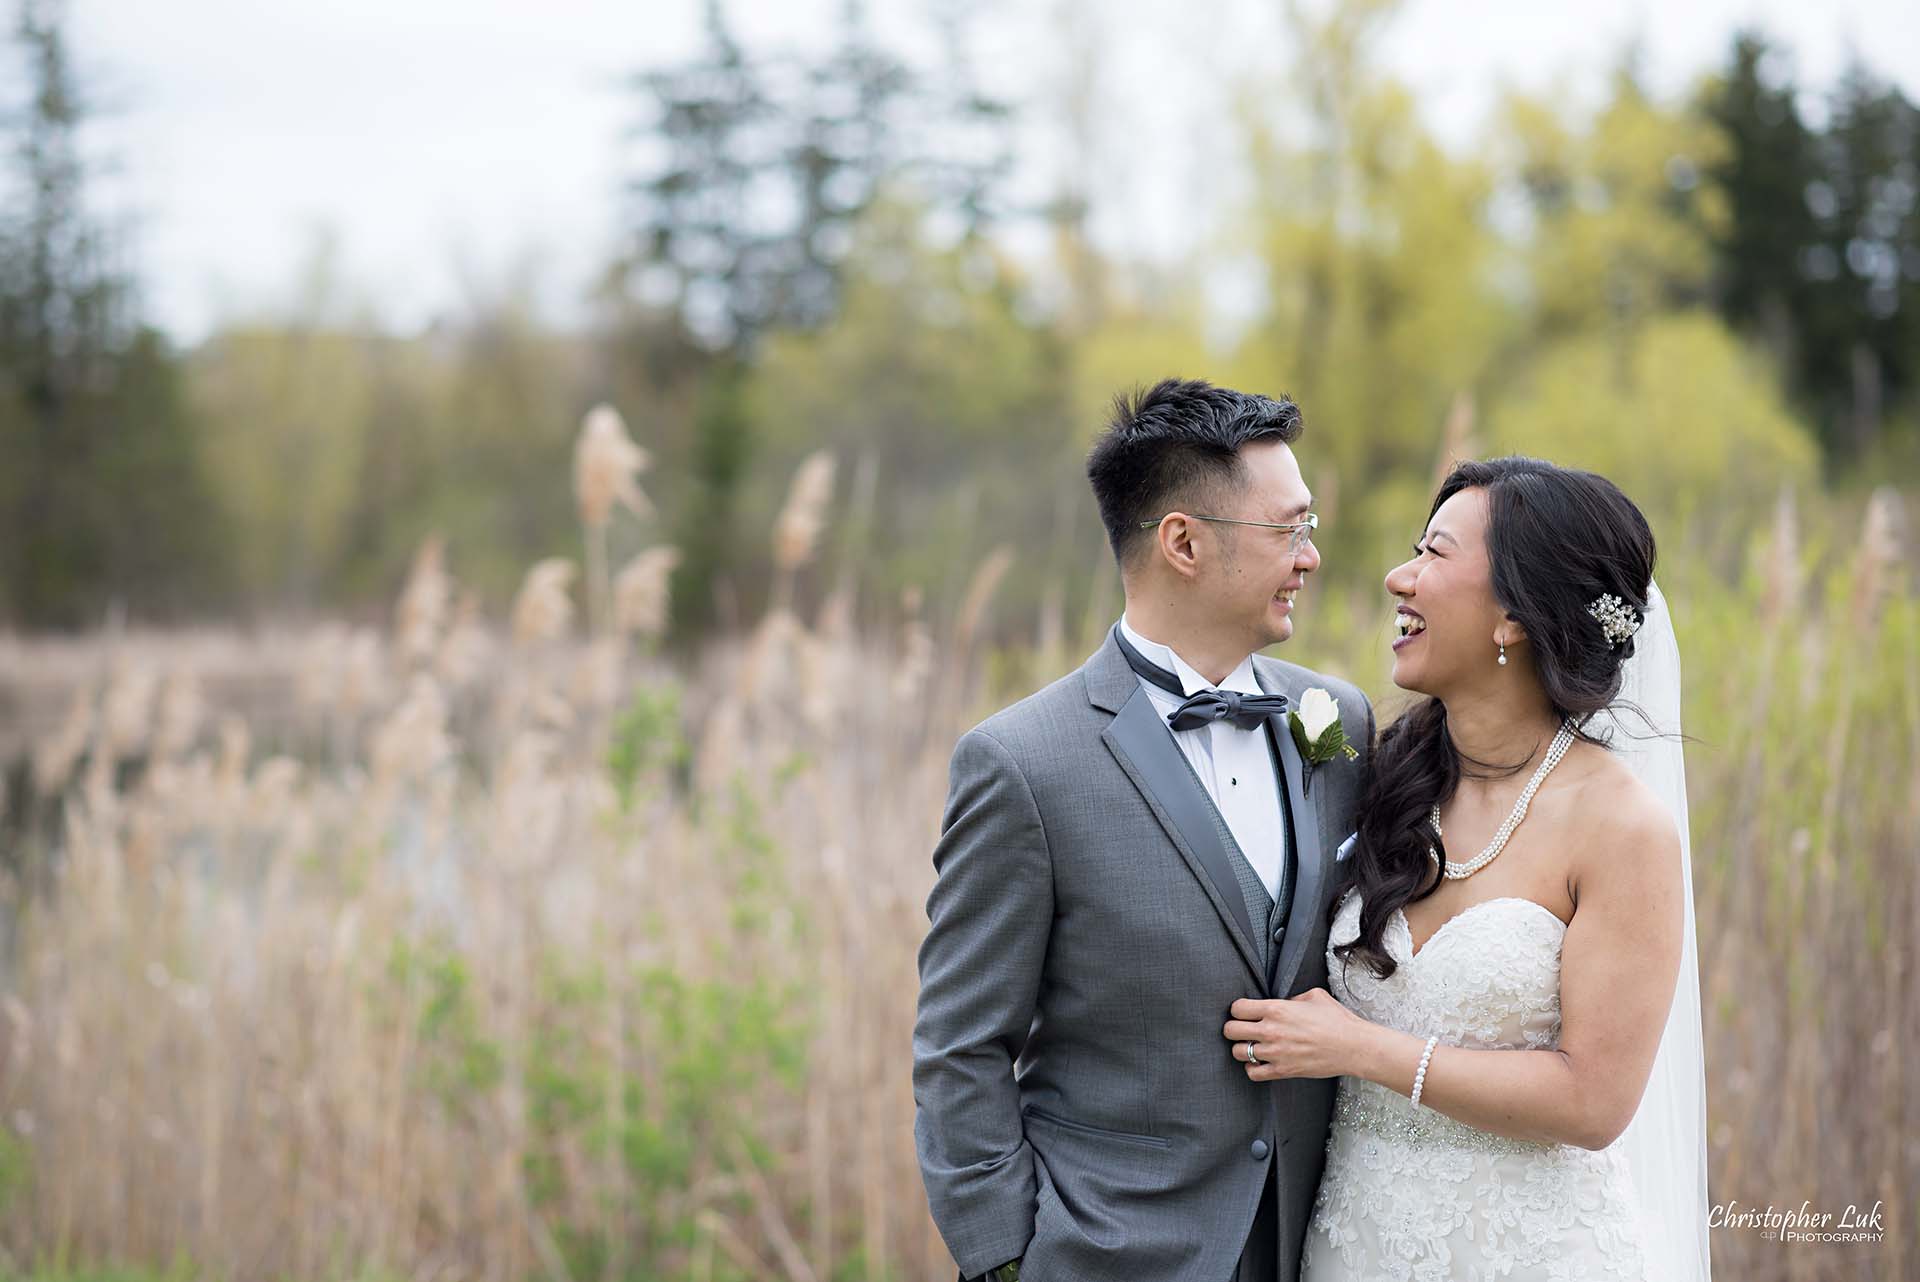 Christopher Luk Toronto Wedding Photographer Eagles Nest Golf Club Course Together Bride Groom Hold Hug Candid Natural Photojournalistic Laugh  